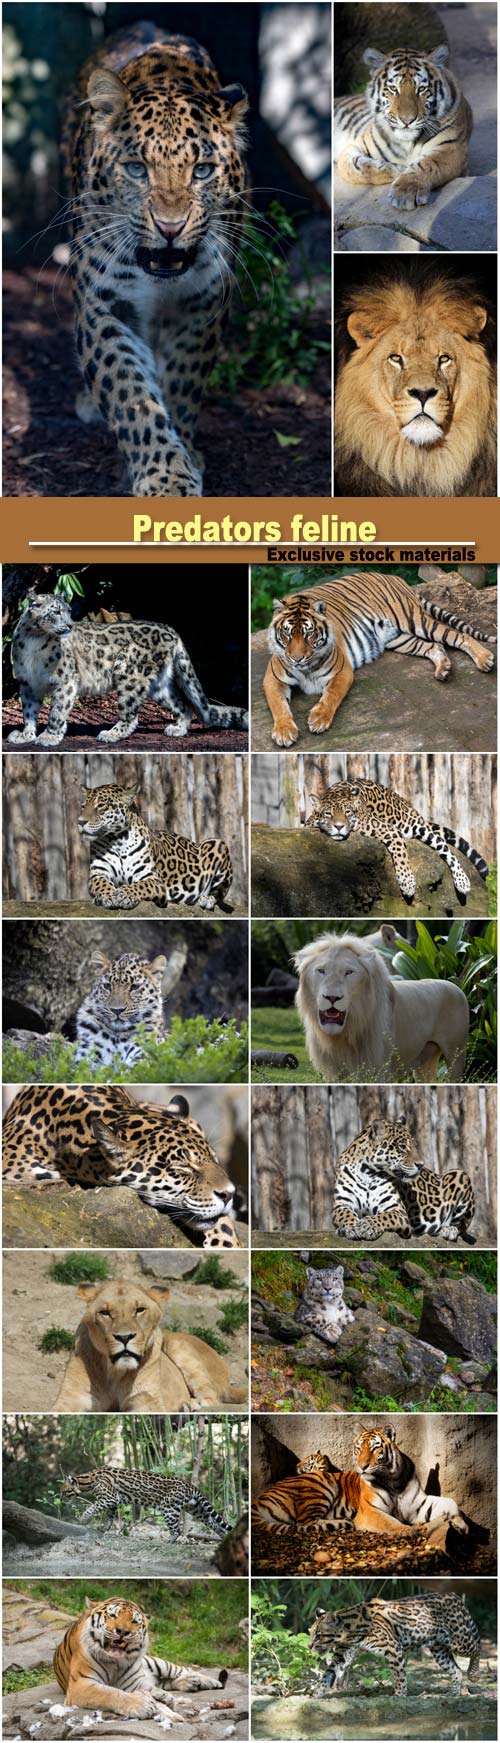 Predators feline, tiger, leopard, lion